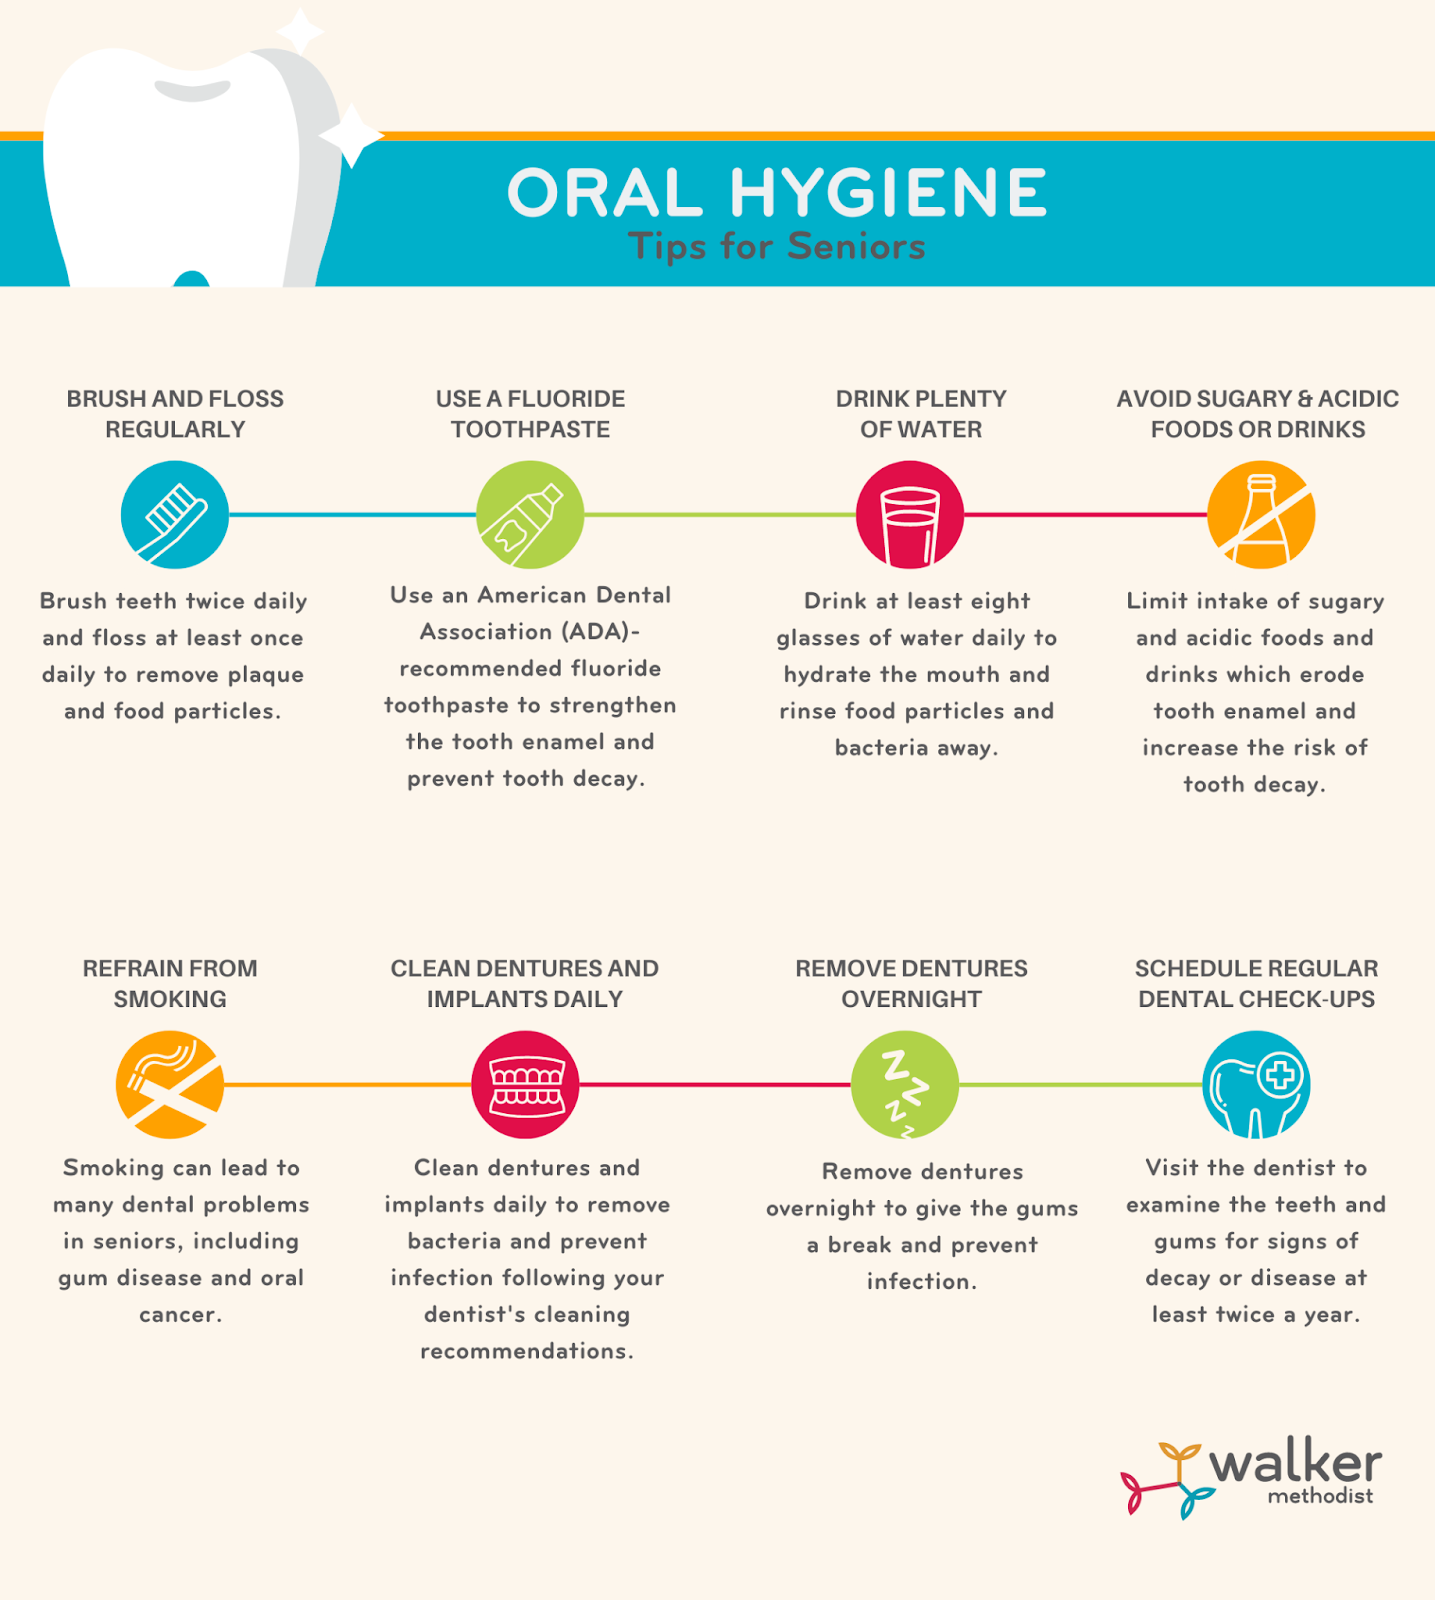 Oral hygiene tips